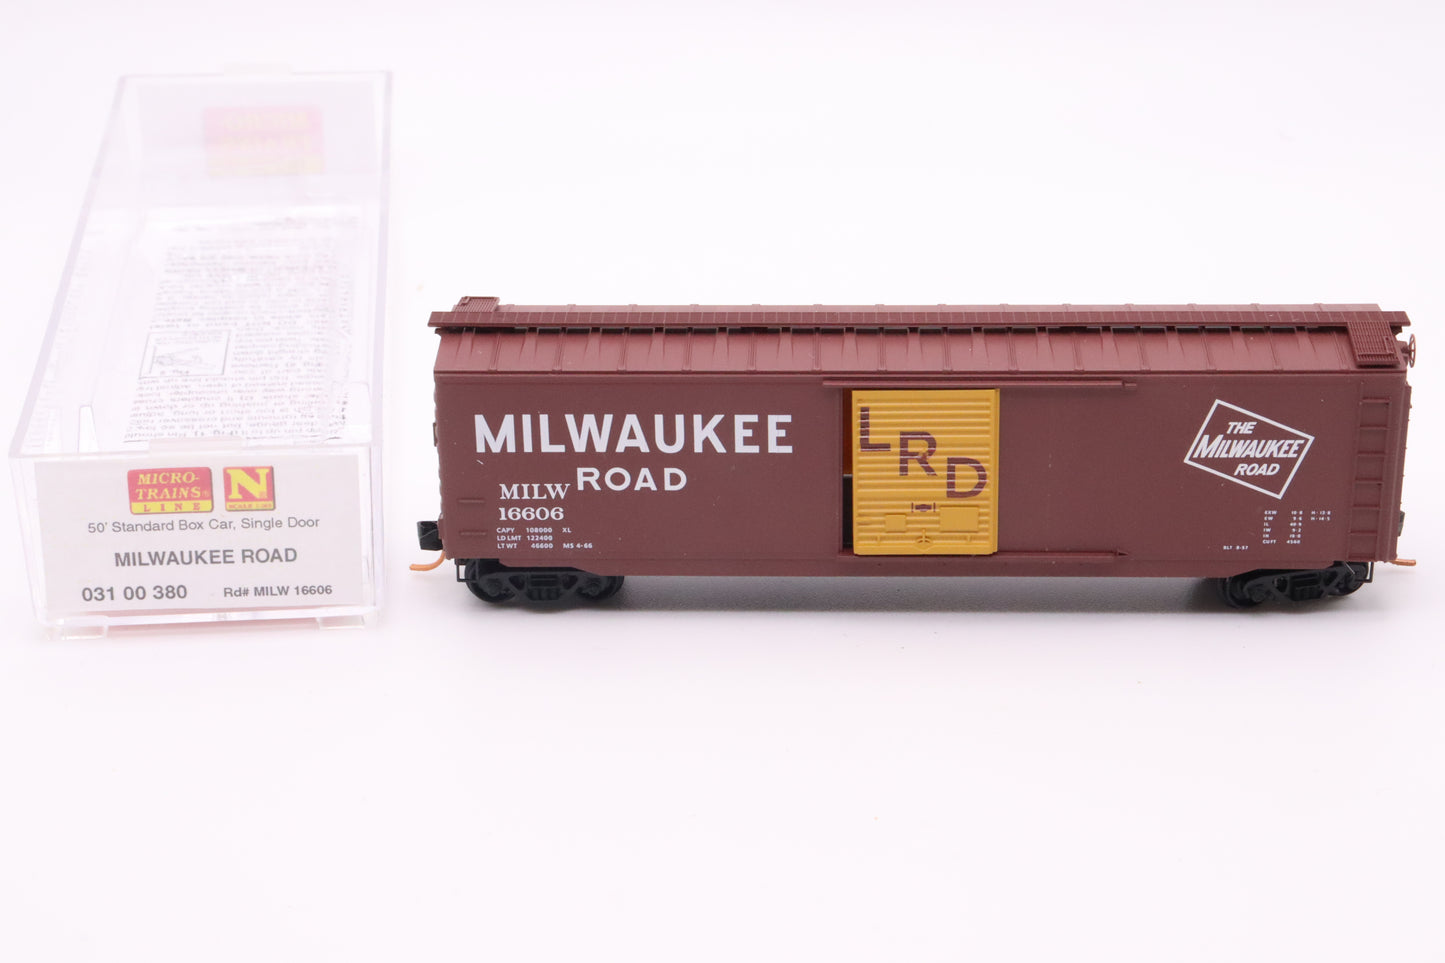 MTL-031 00 380 - 50' Standard Box Car, Single Door - Milwaukee Road - MILW #16606